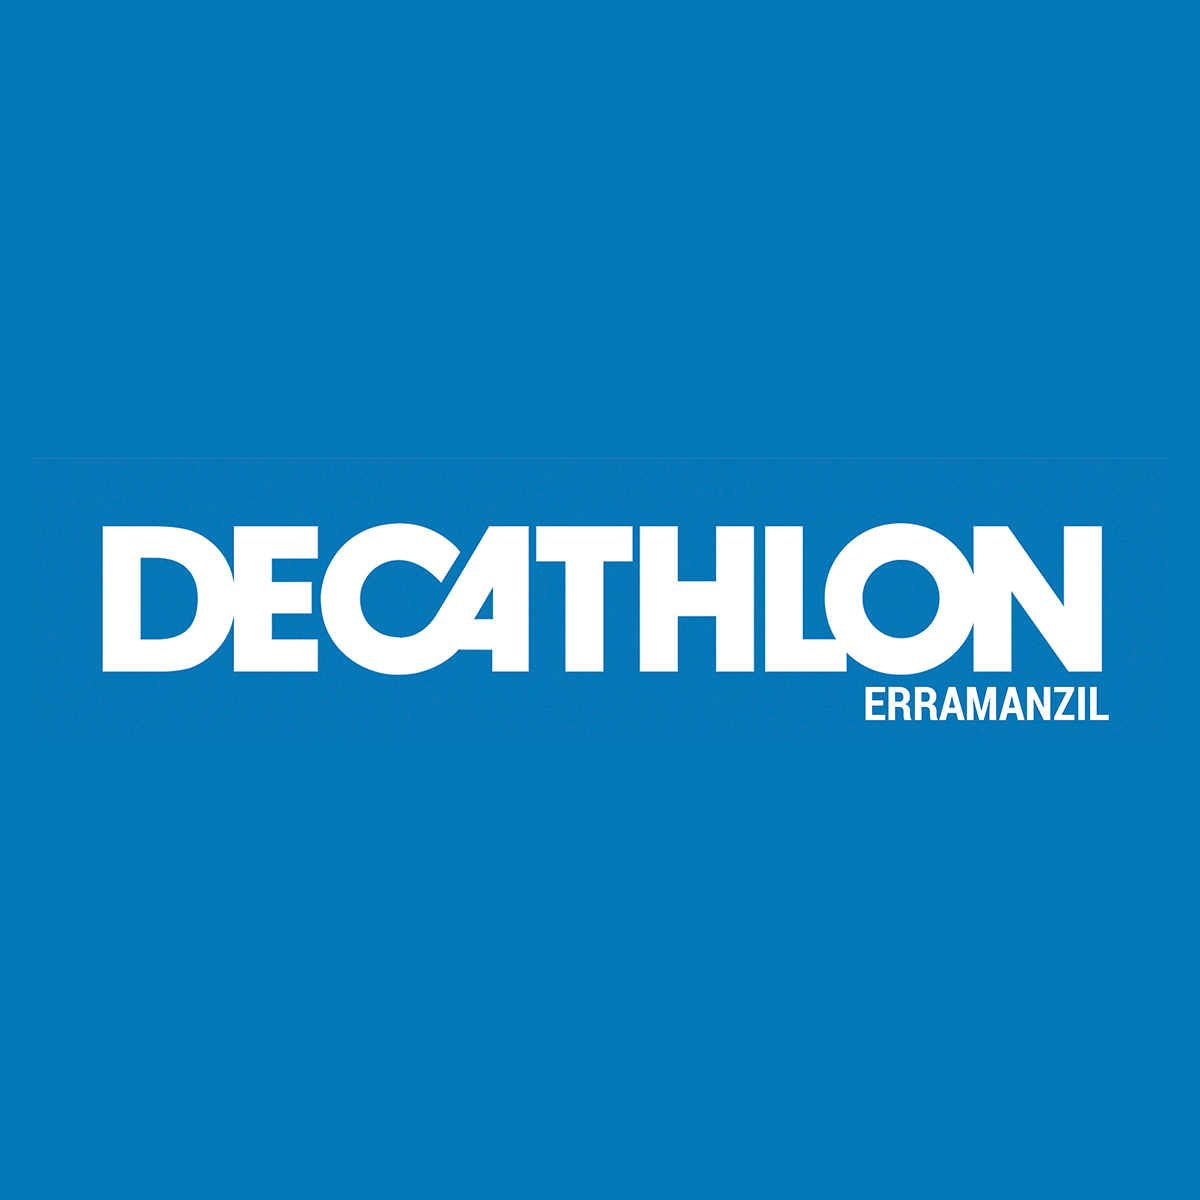 Decathlon, Next Galleria Malls